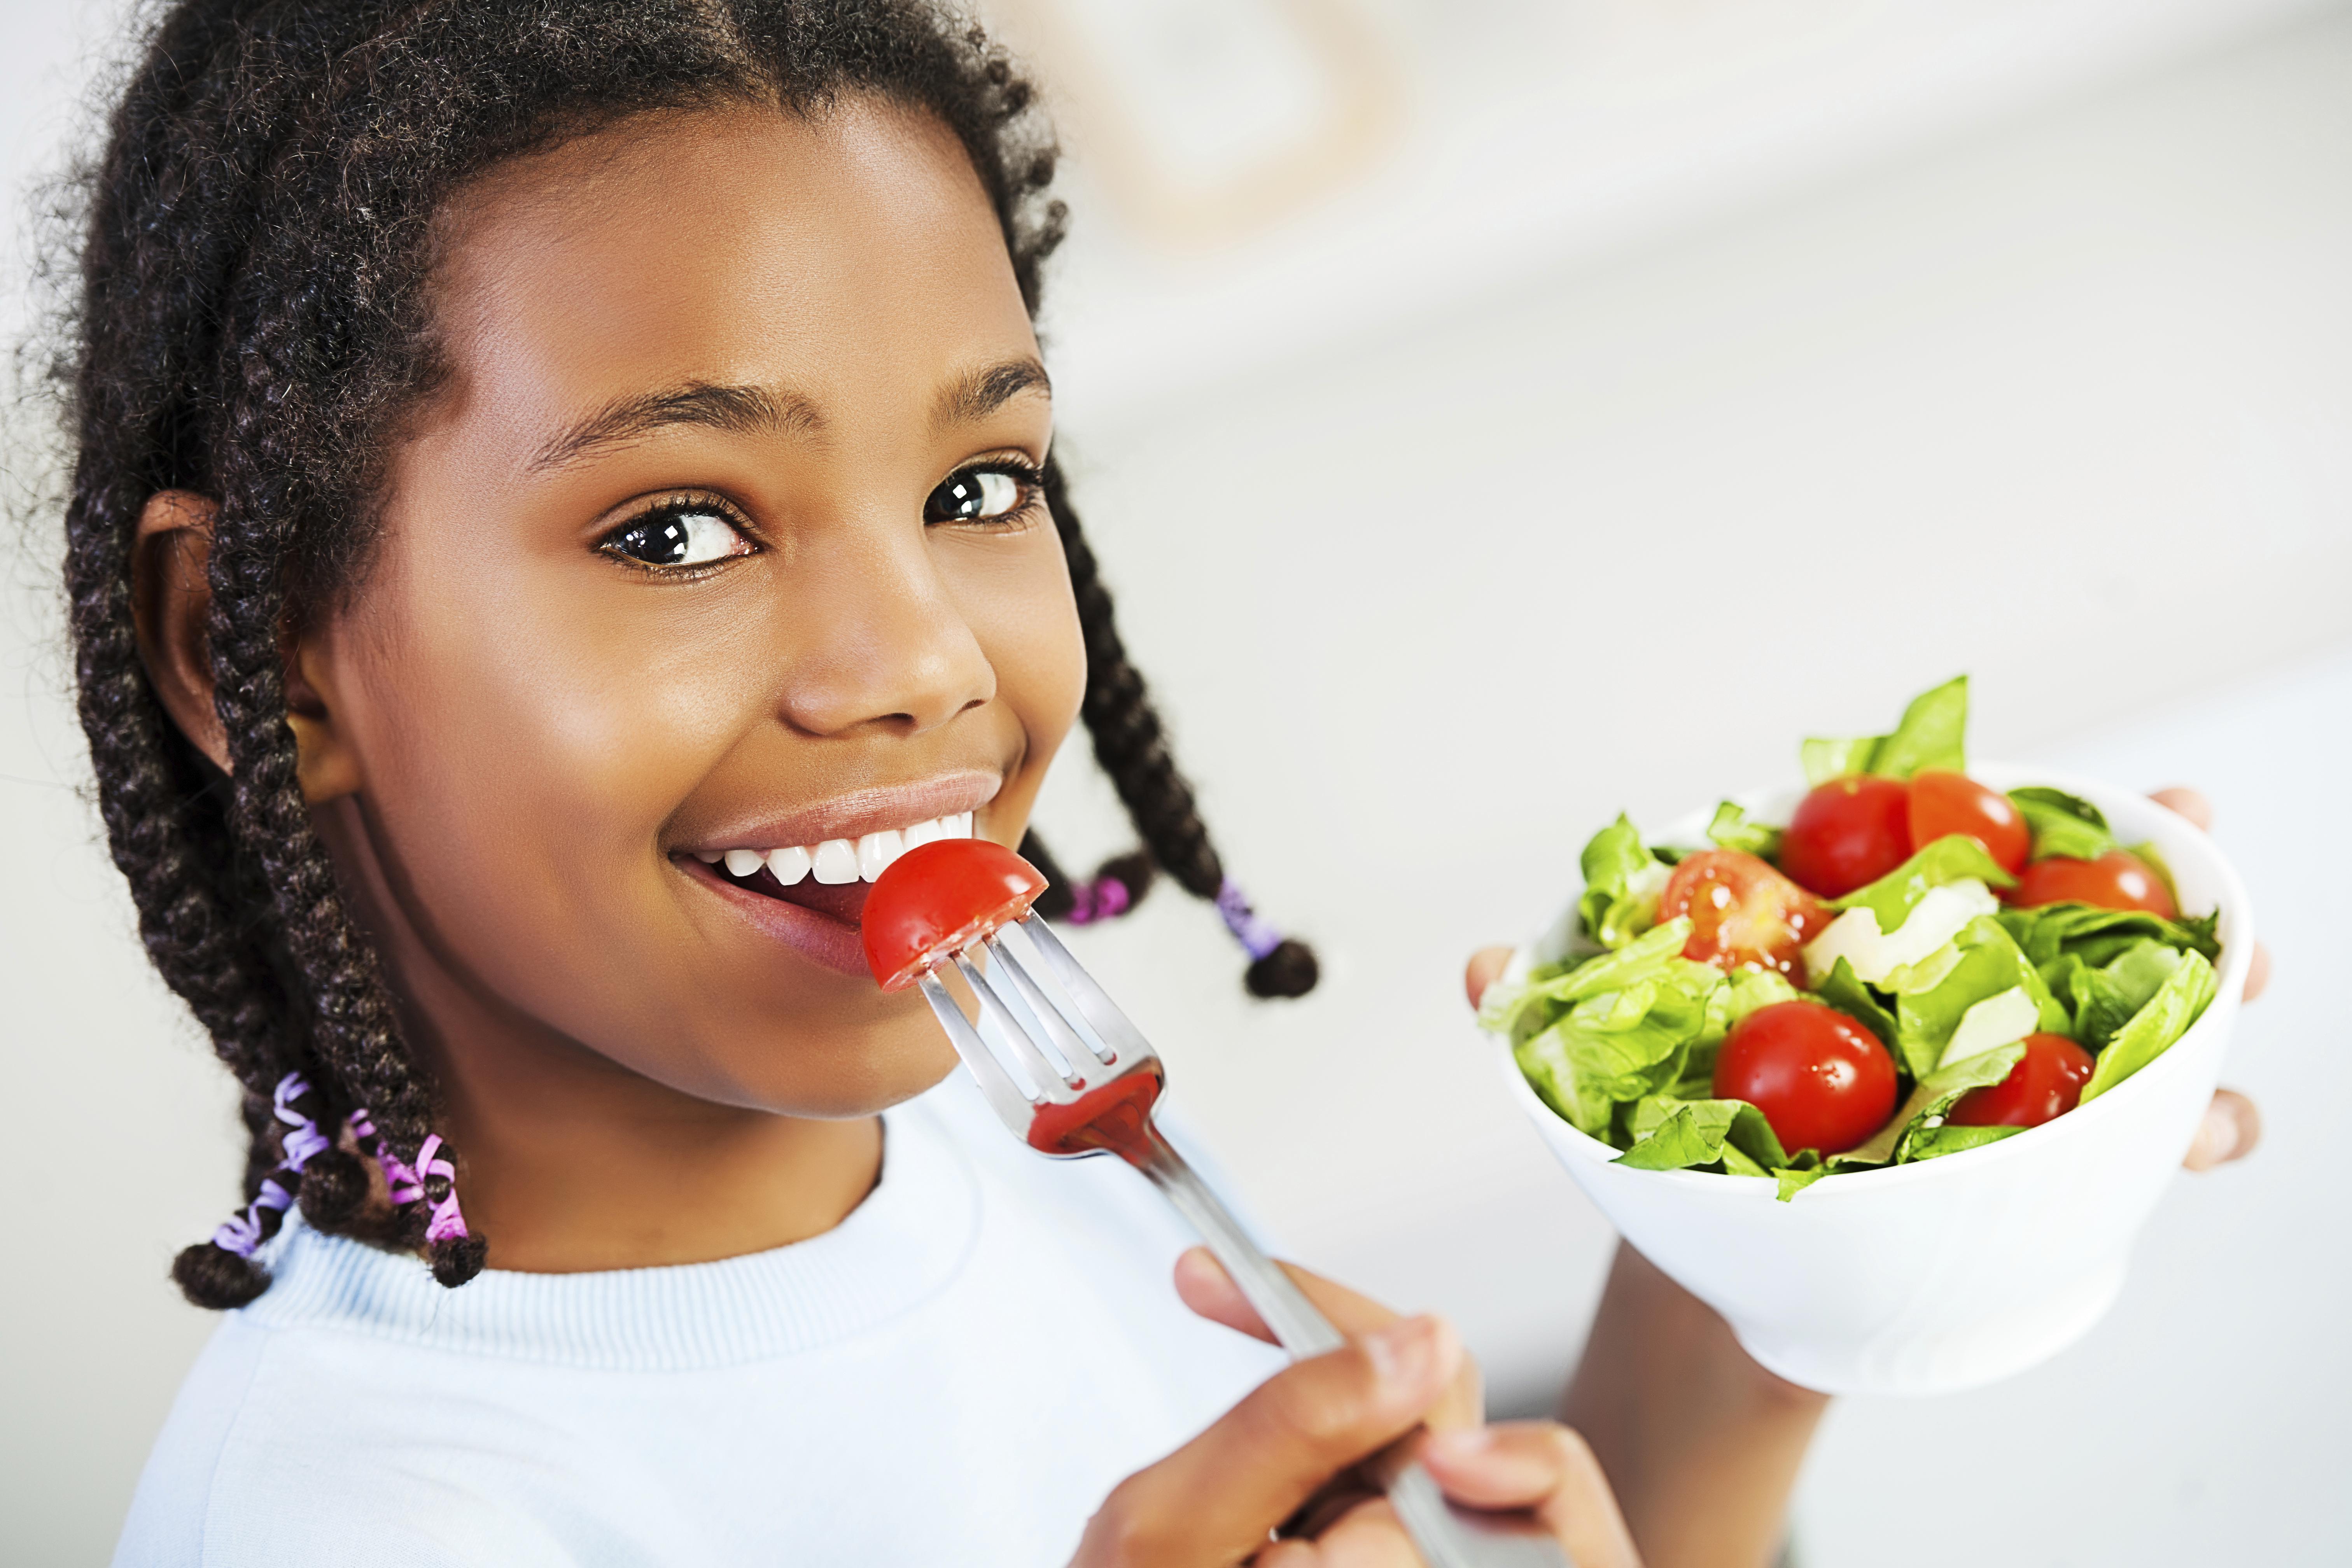 Little girl eating vegetable salad.